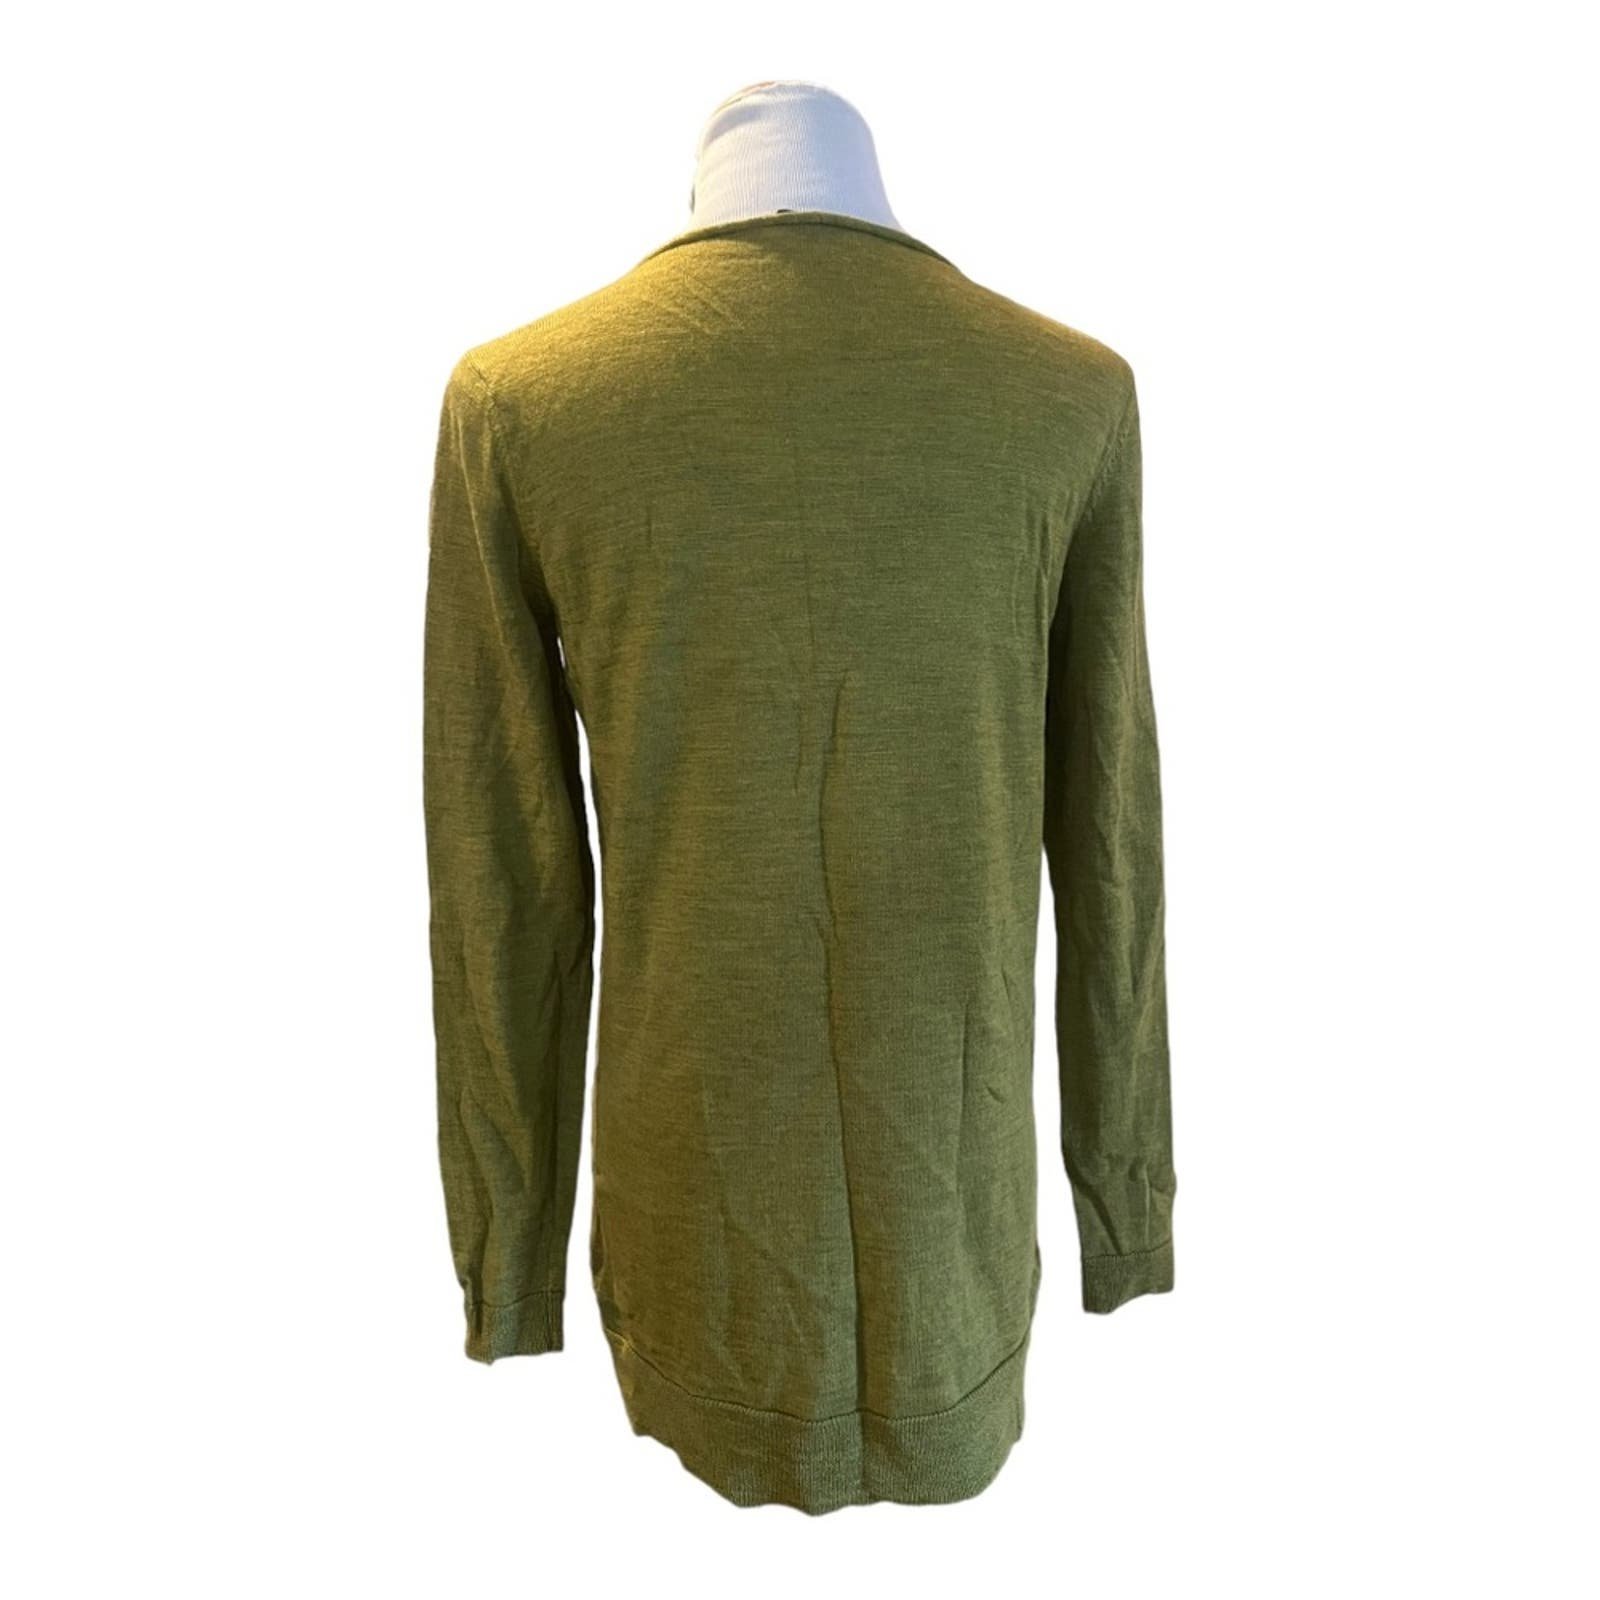 Perfect Eileen Fisher Merino Wool Green Sweater VNeck Lightweight PS ja8zAvU1f Outlet Store